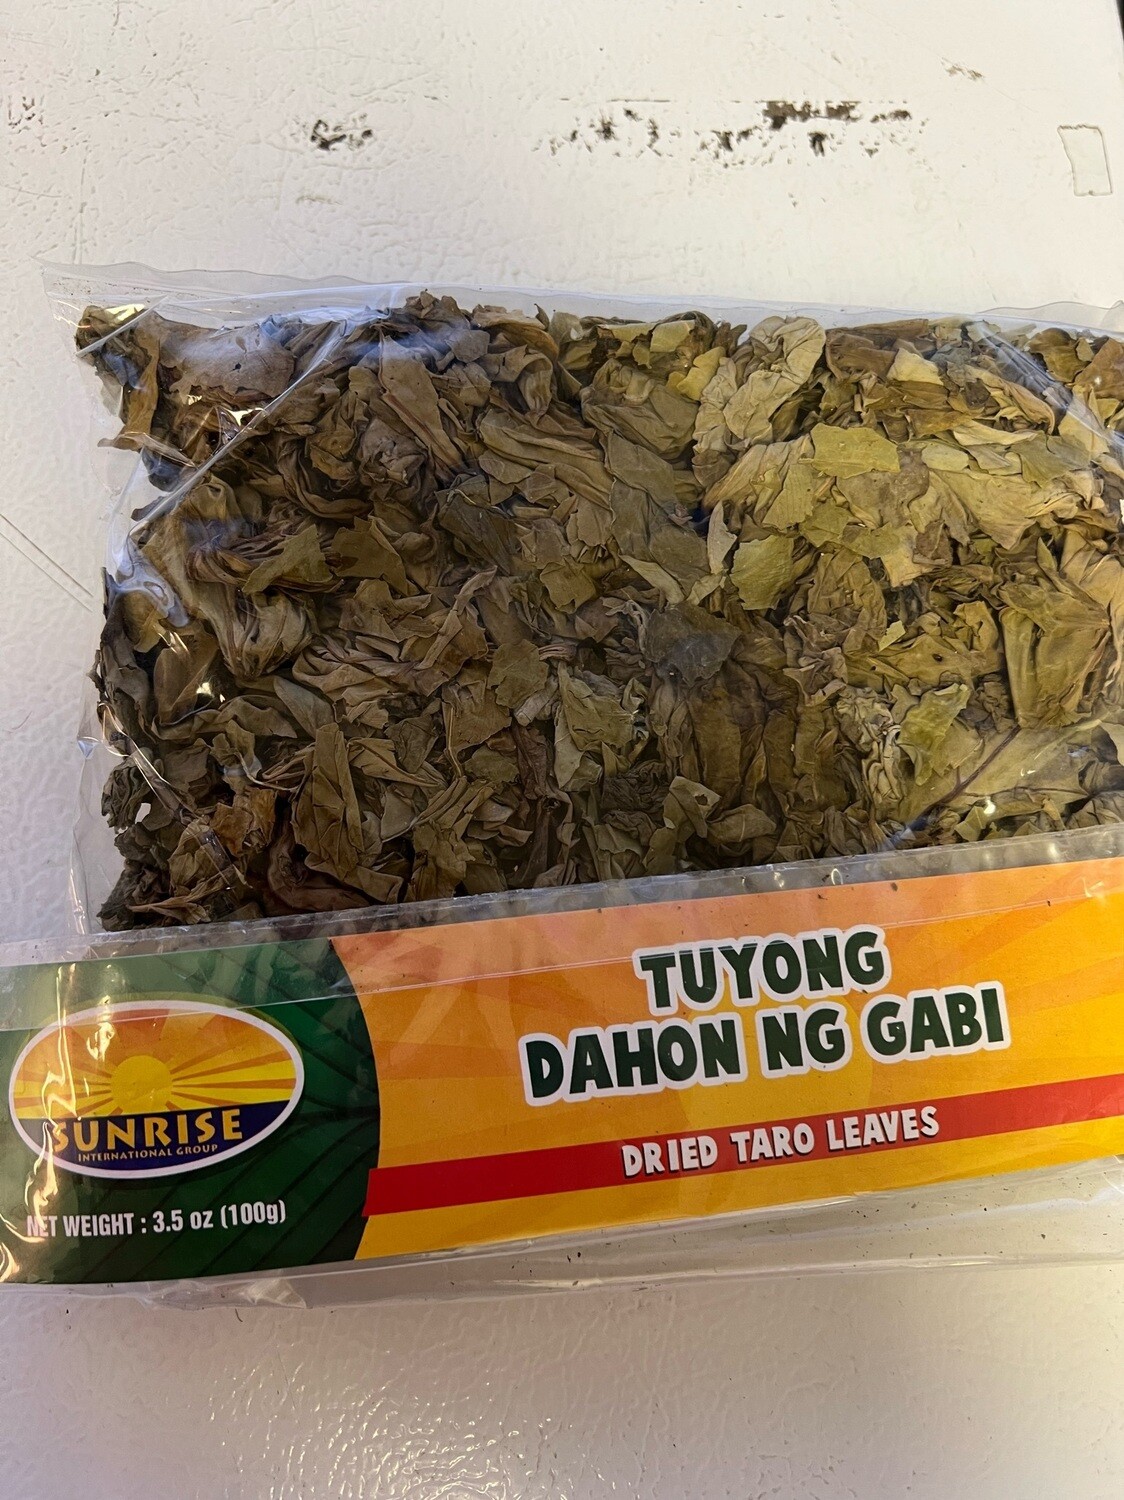 Sunrise Tuyong Dahon Ng Gabi Dried Taro Leaves